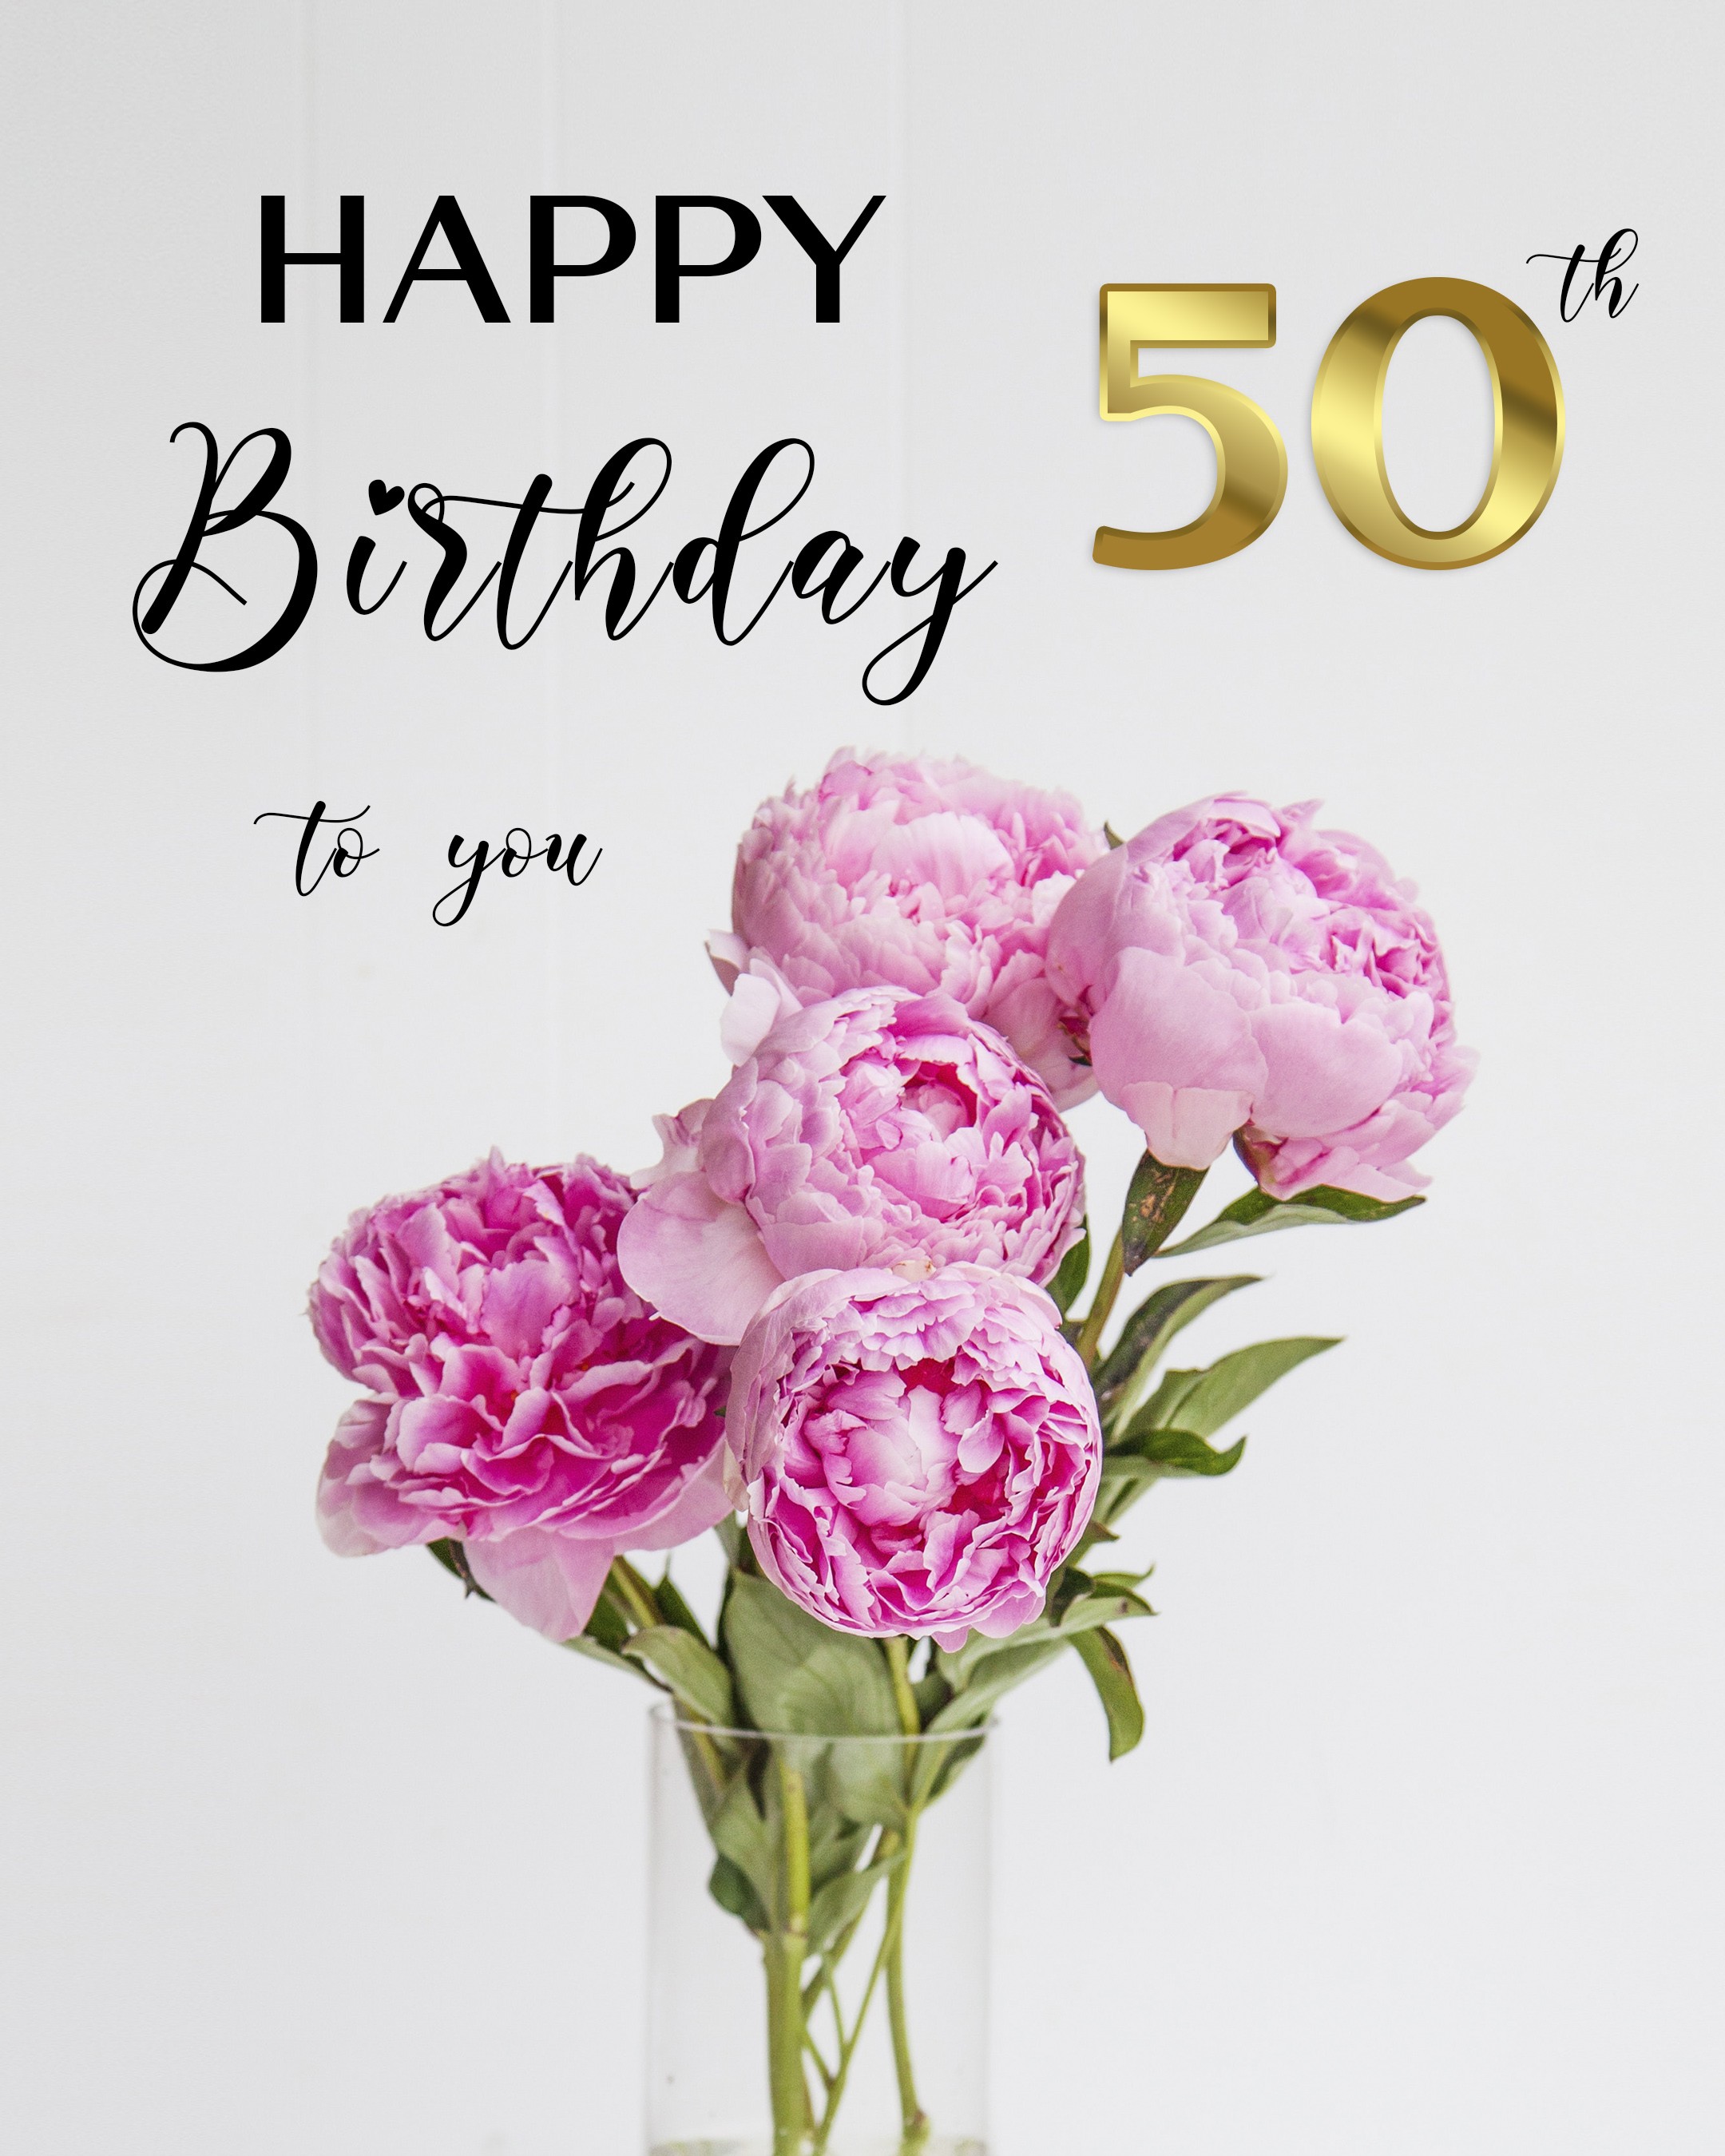 Free 50th Years Happy Birthday Image With Flowers - birthdayimg.com